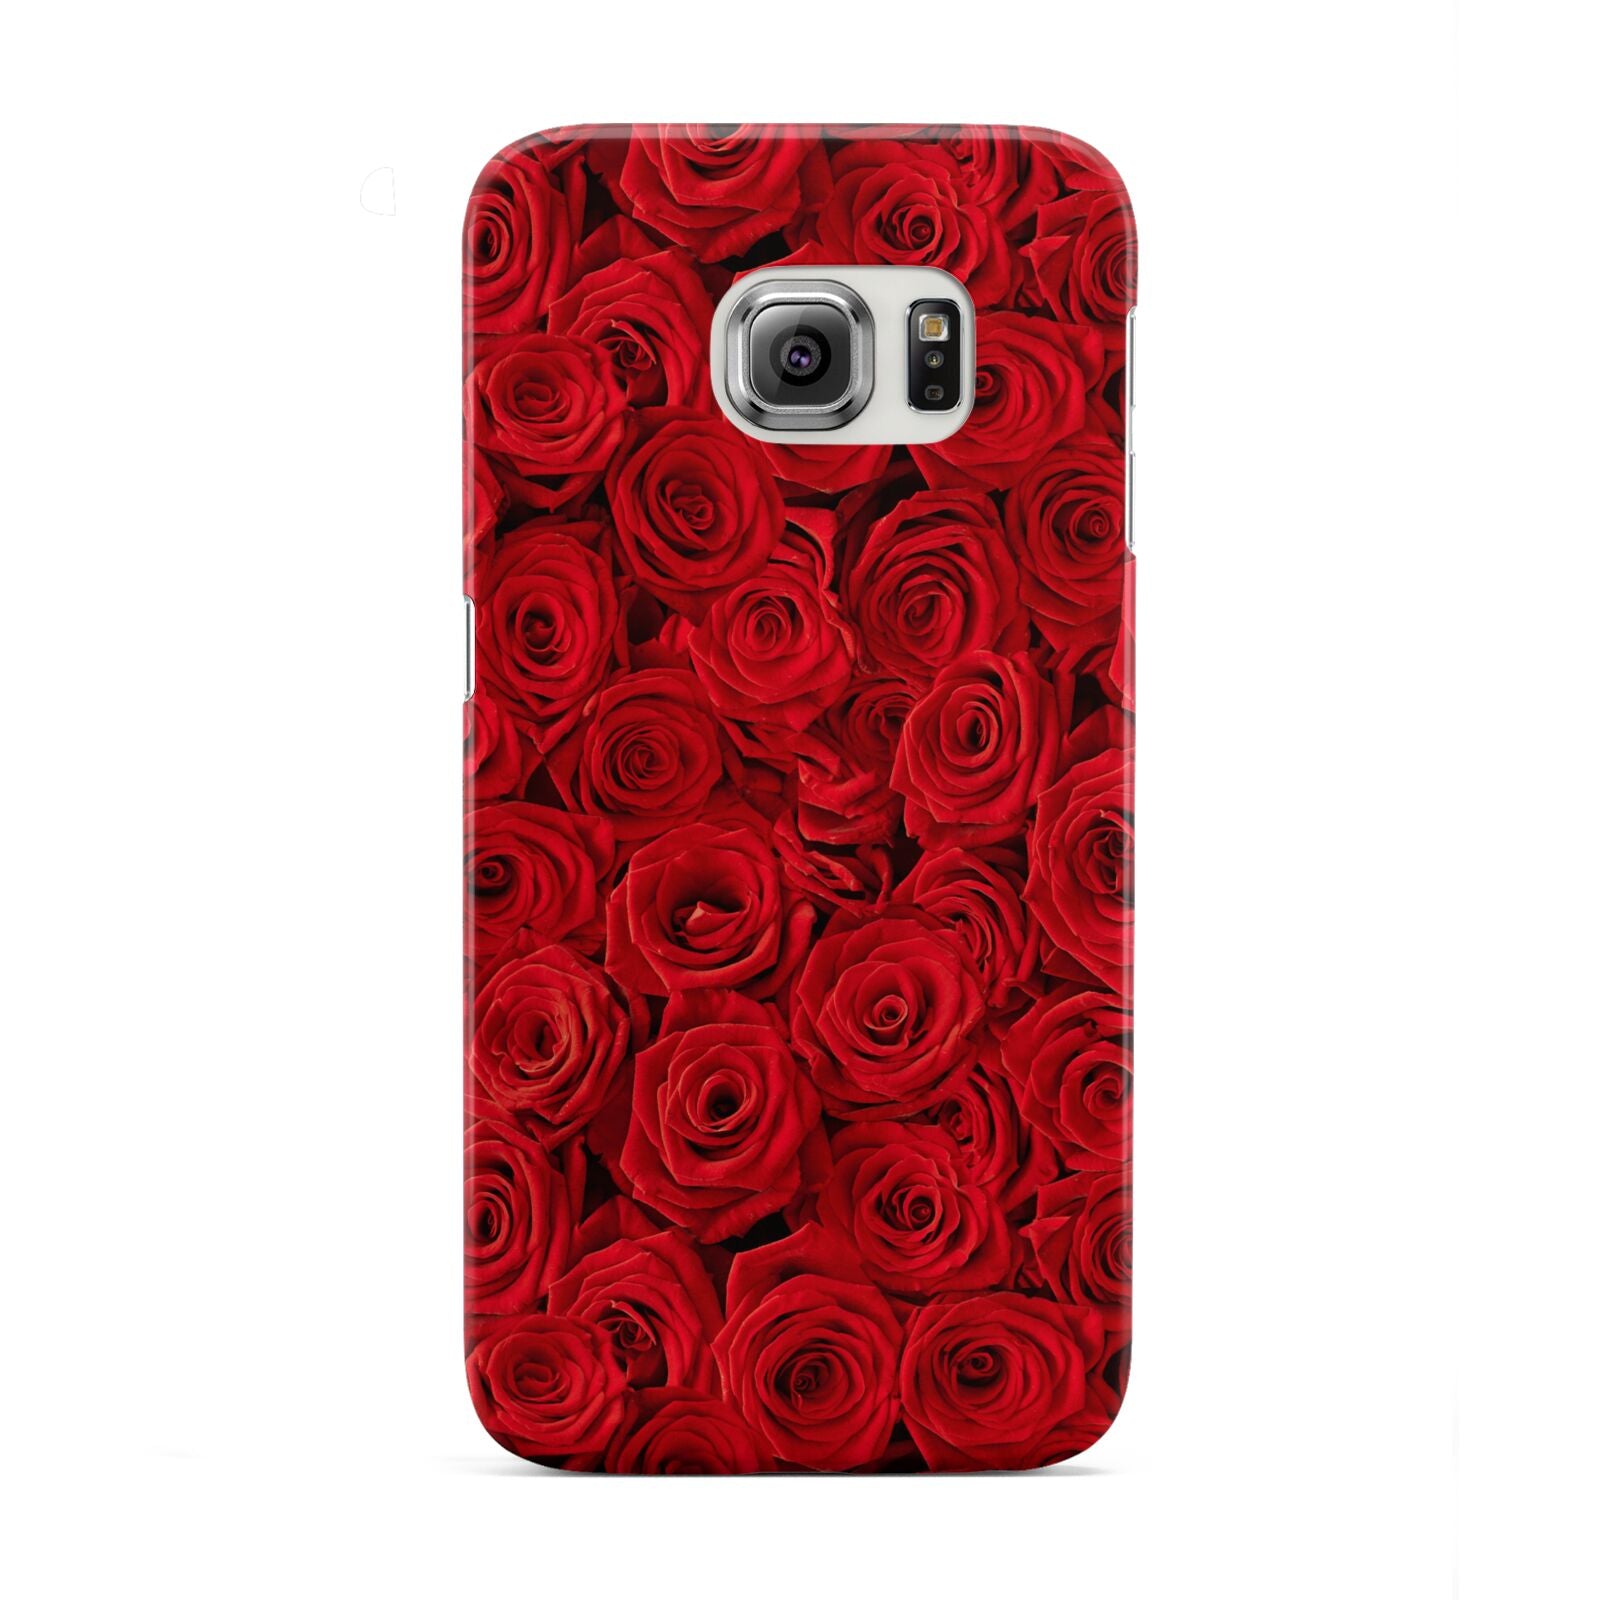 Red Rose Samsung Galaxy S6 Edge Case